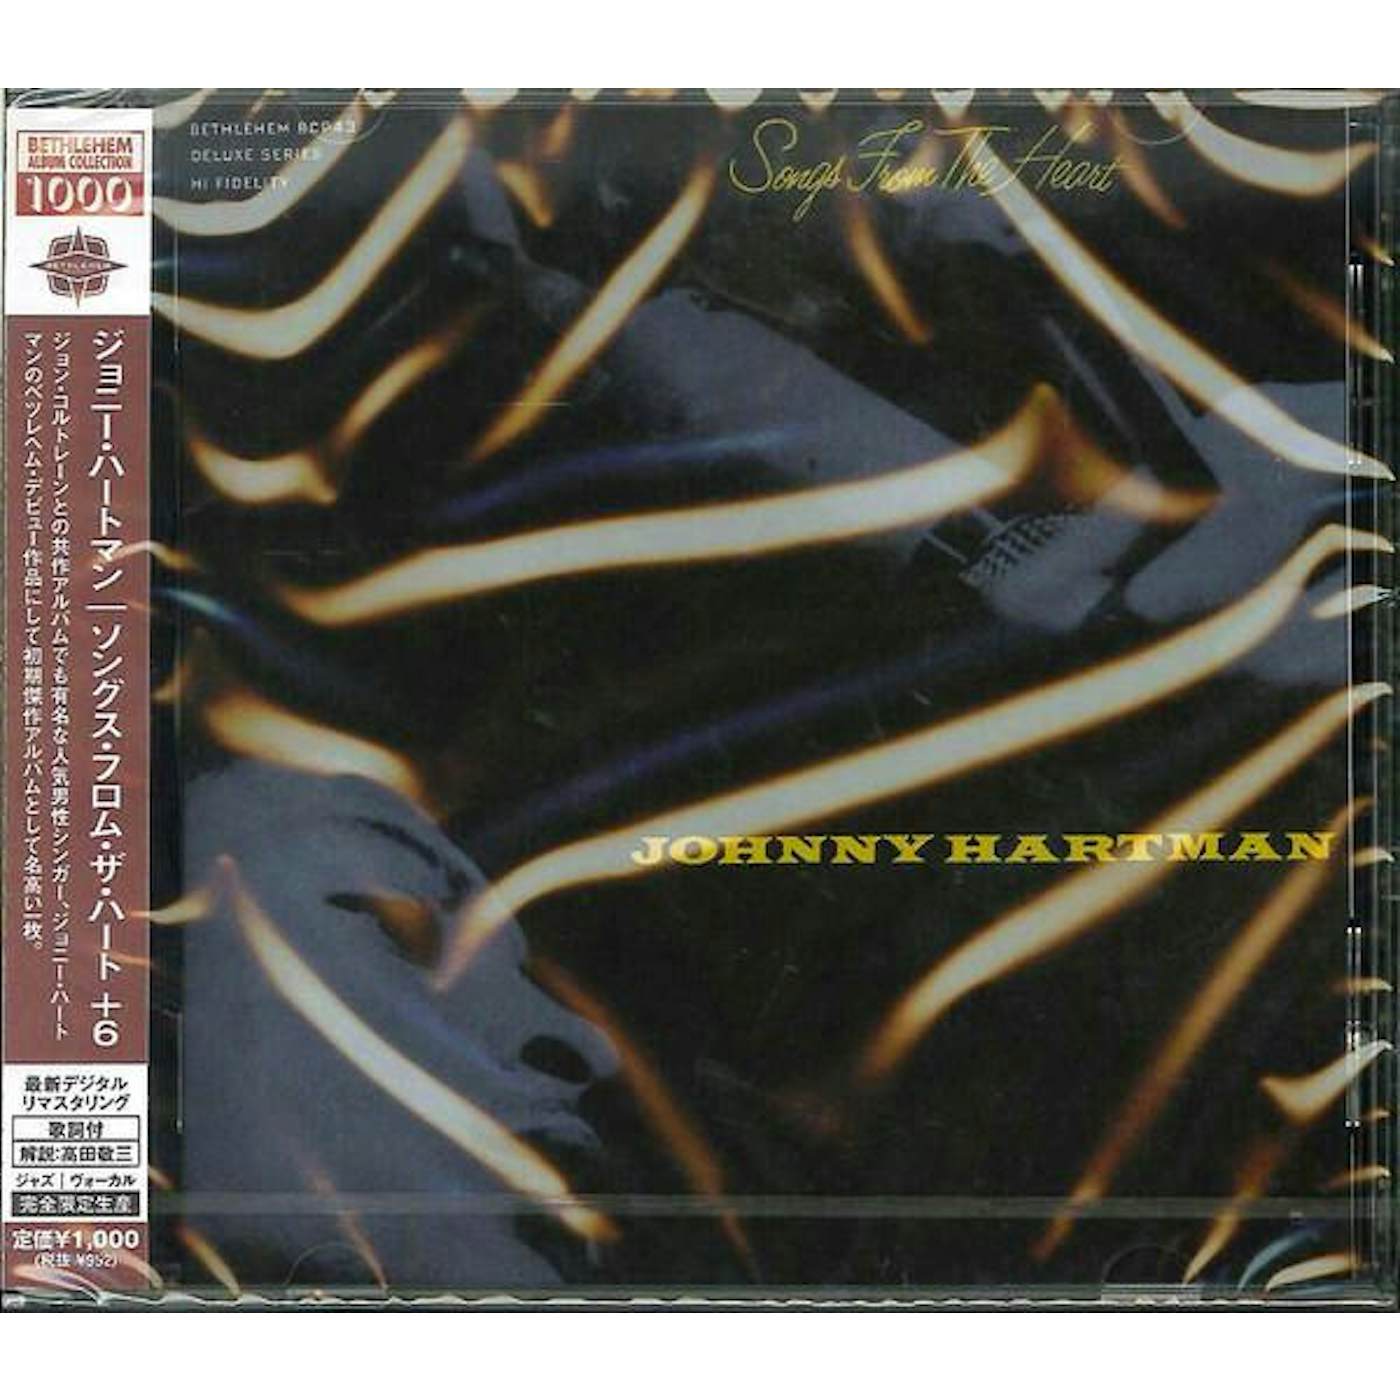 Johnny Hartman SONGS FROM THE HEART + 6 CD